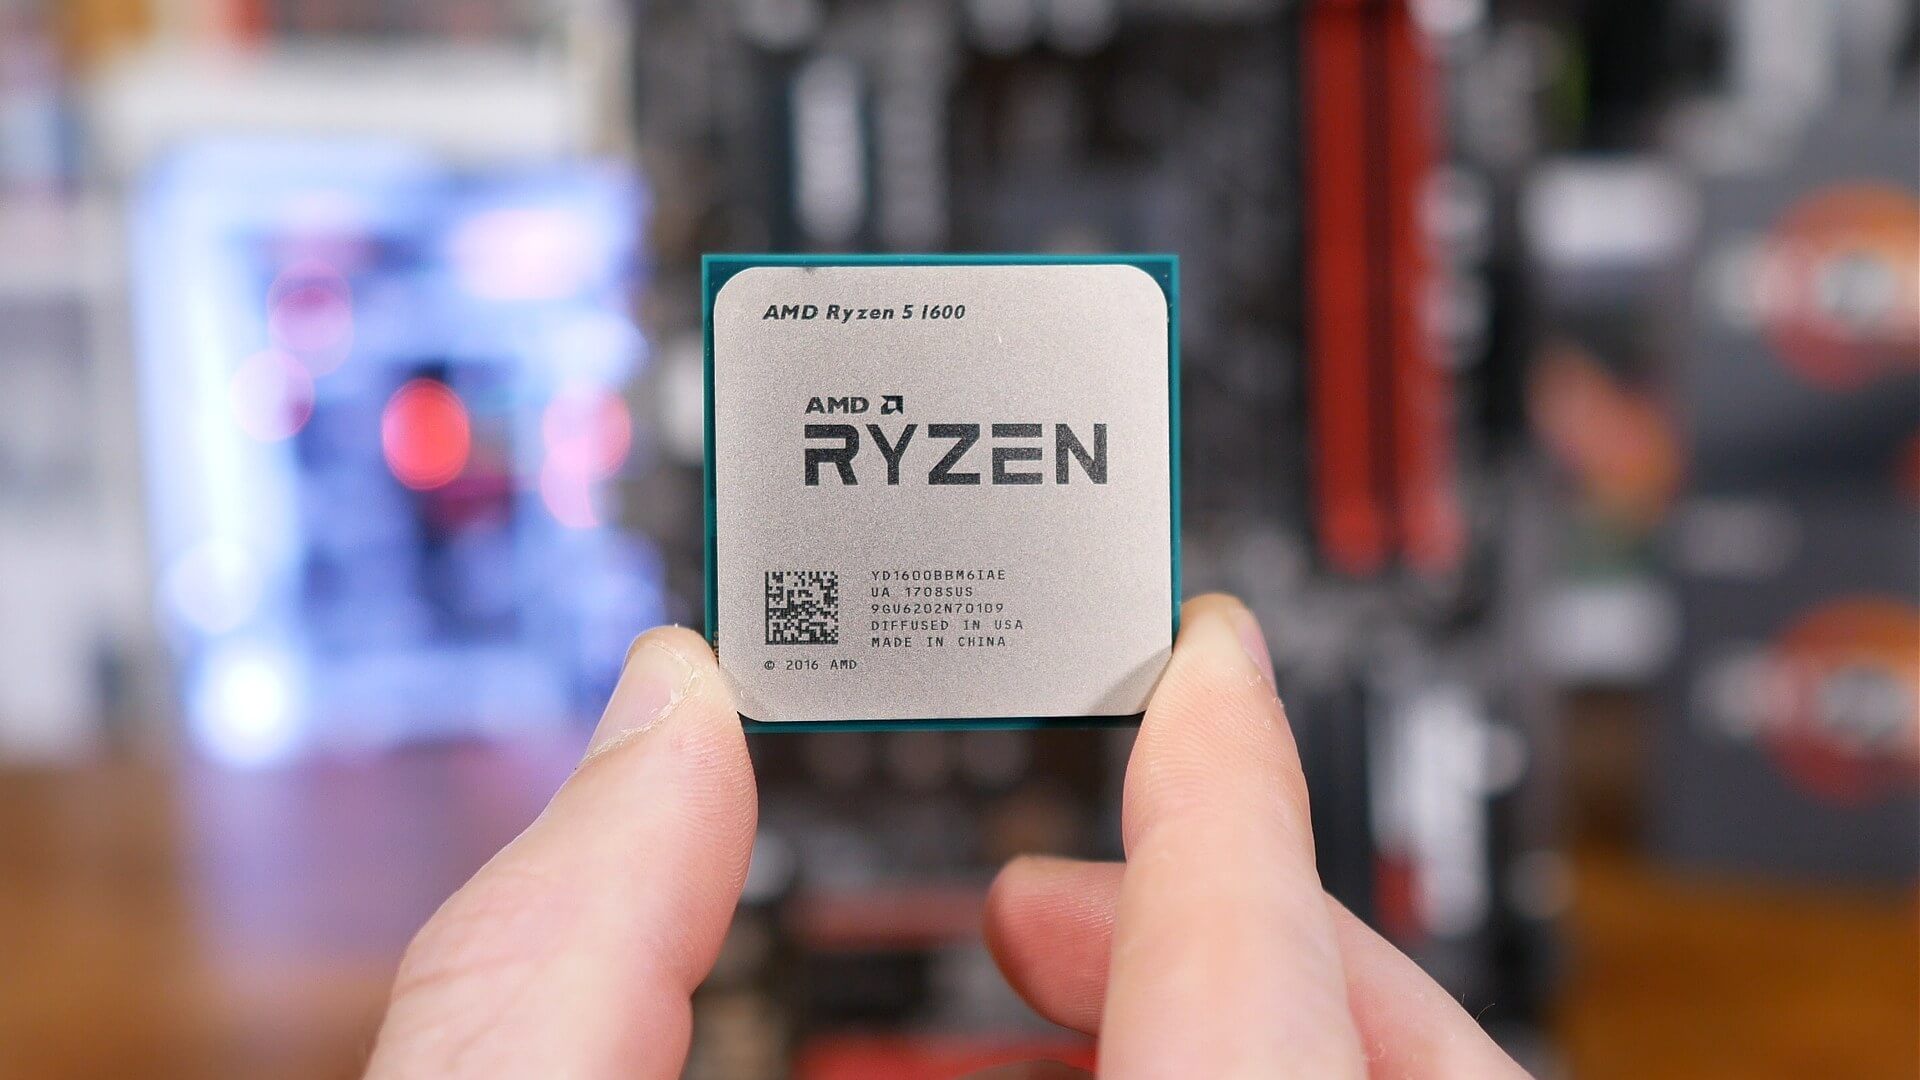 Процессор amd ryzen 5 1600x. Процессор АМД 5 1600. AMD Ryzen 5 1600 af. AMD Risen 5 1600. AMD Ryzen 5 1600 Six-Core Processor 3.20 GHZ.